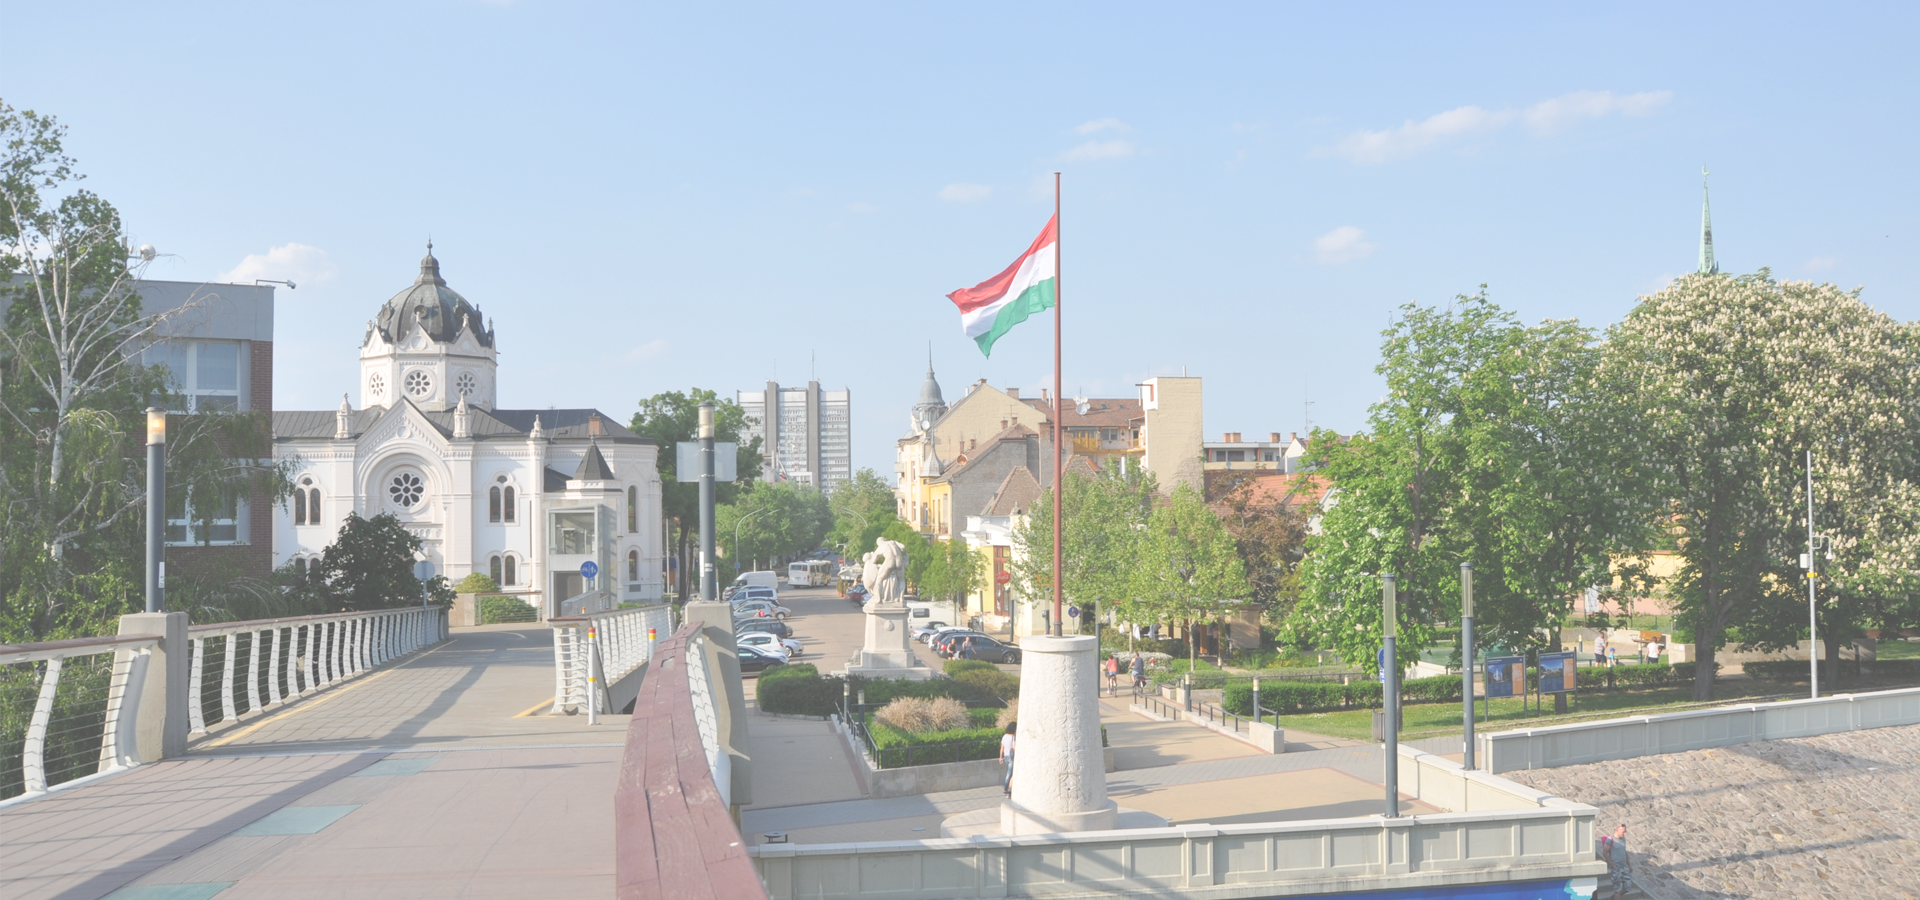 <b>Szolnok, Jasz-Nagykun-Szolnok, Northern Great Plain Region, Hungary</b>